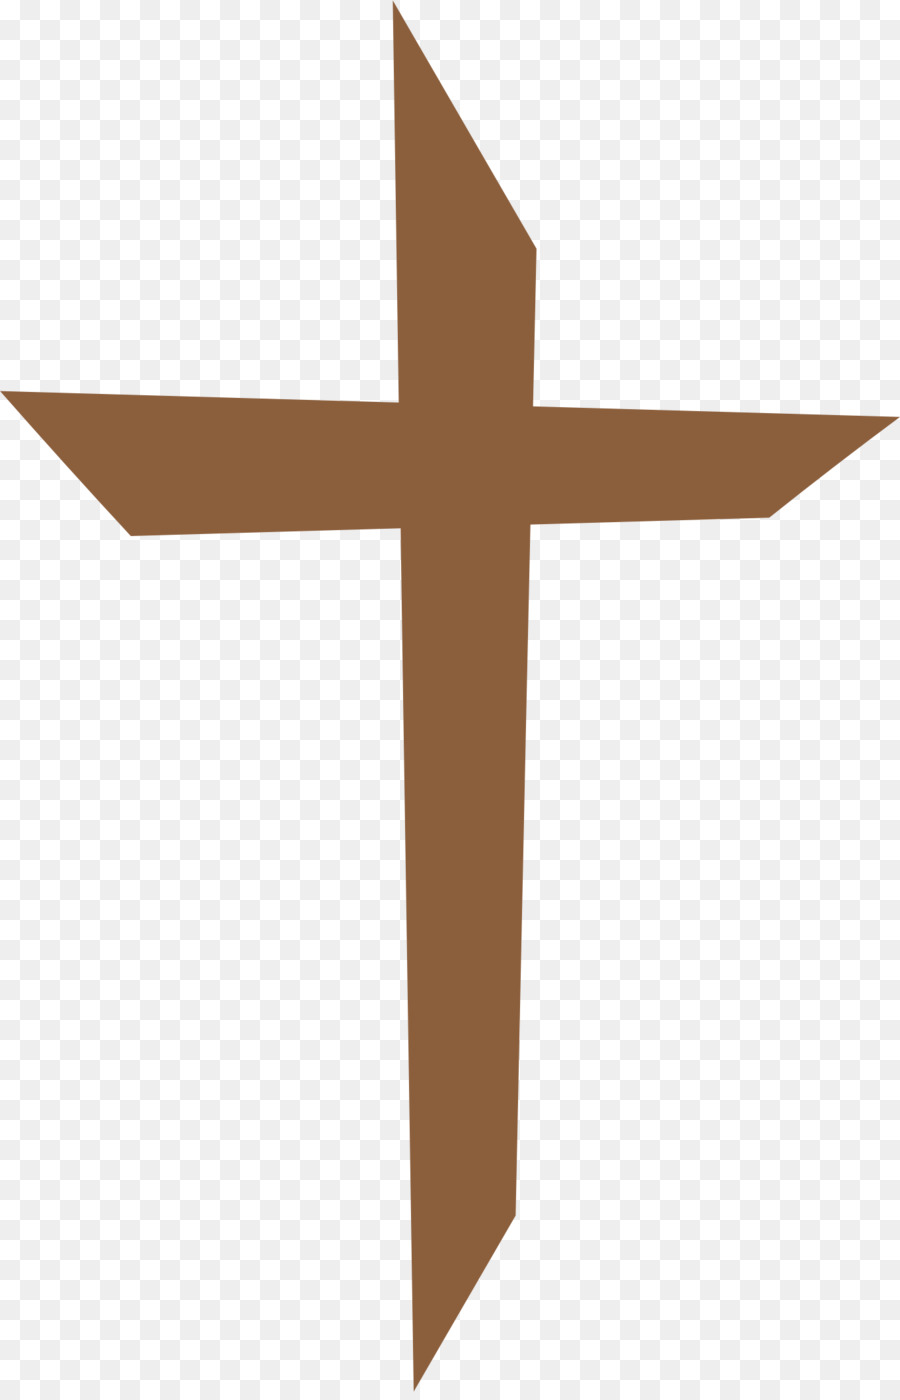 Christian cross Symbol Clip art - Jesus png download - 1362*2106 - Free Transparent Christian Cross png Download.